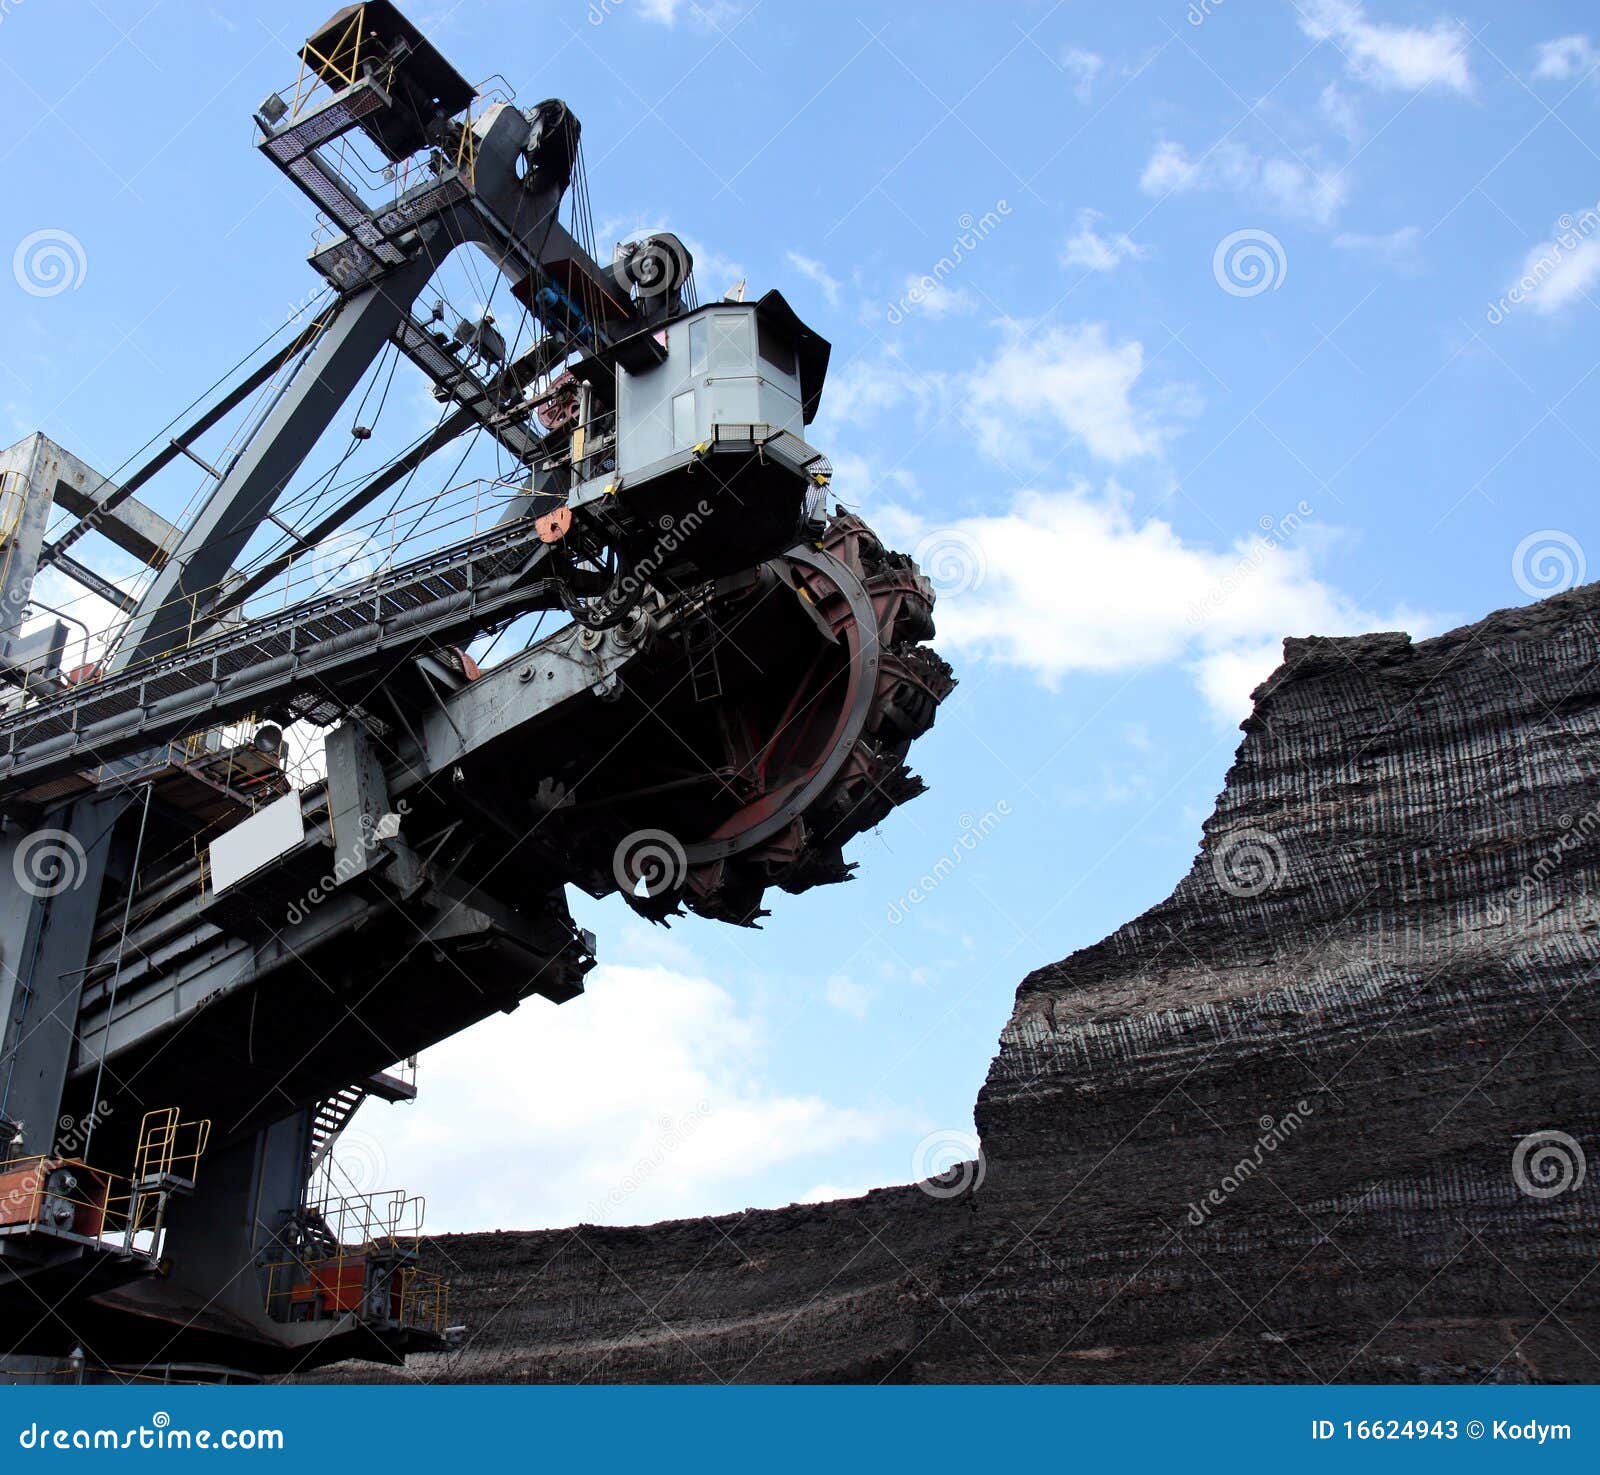 coal mining with big excavator